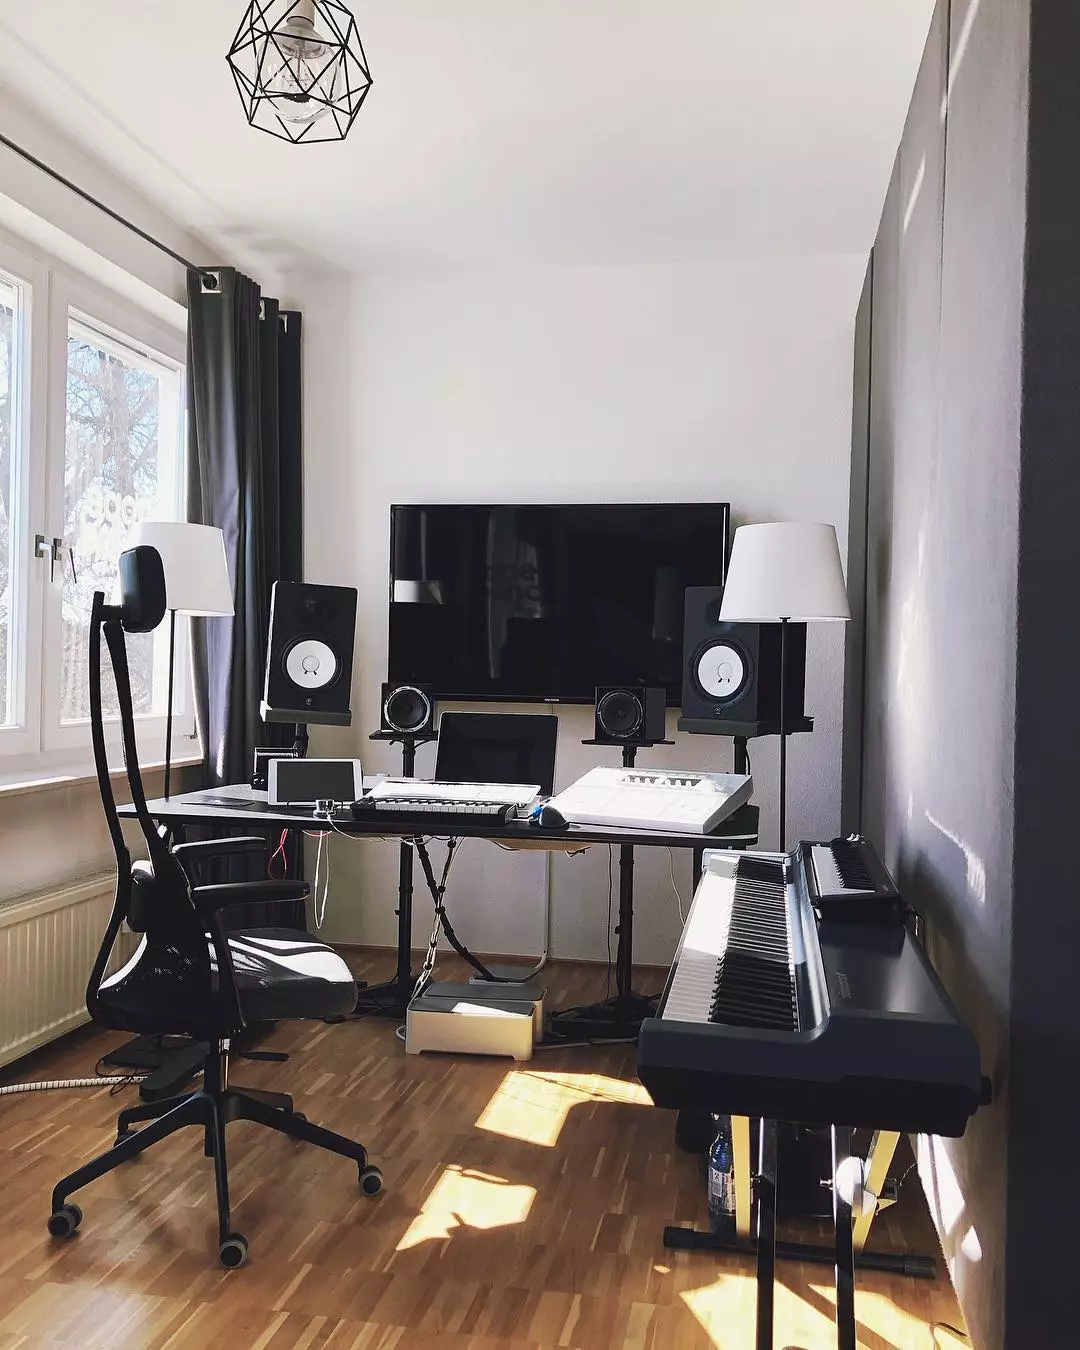 Spare Room Into A Home Music Studio